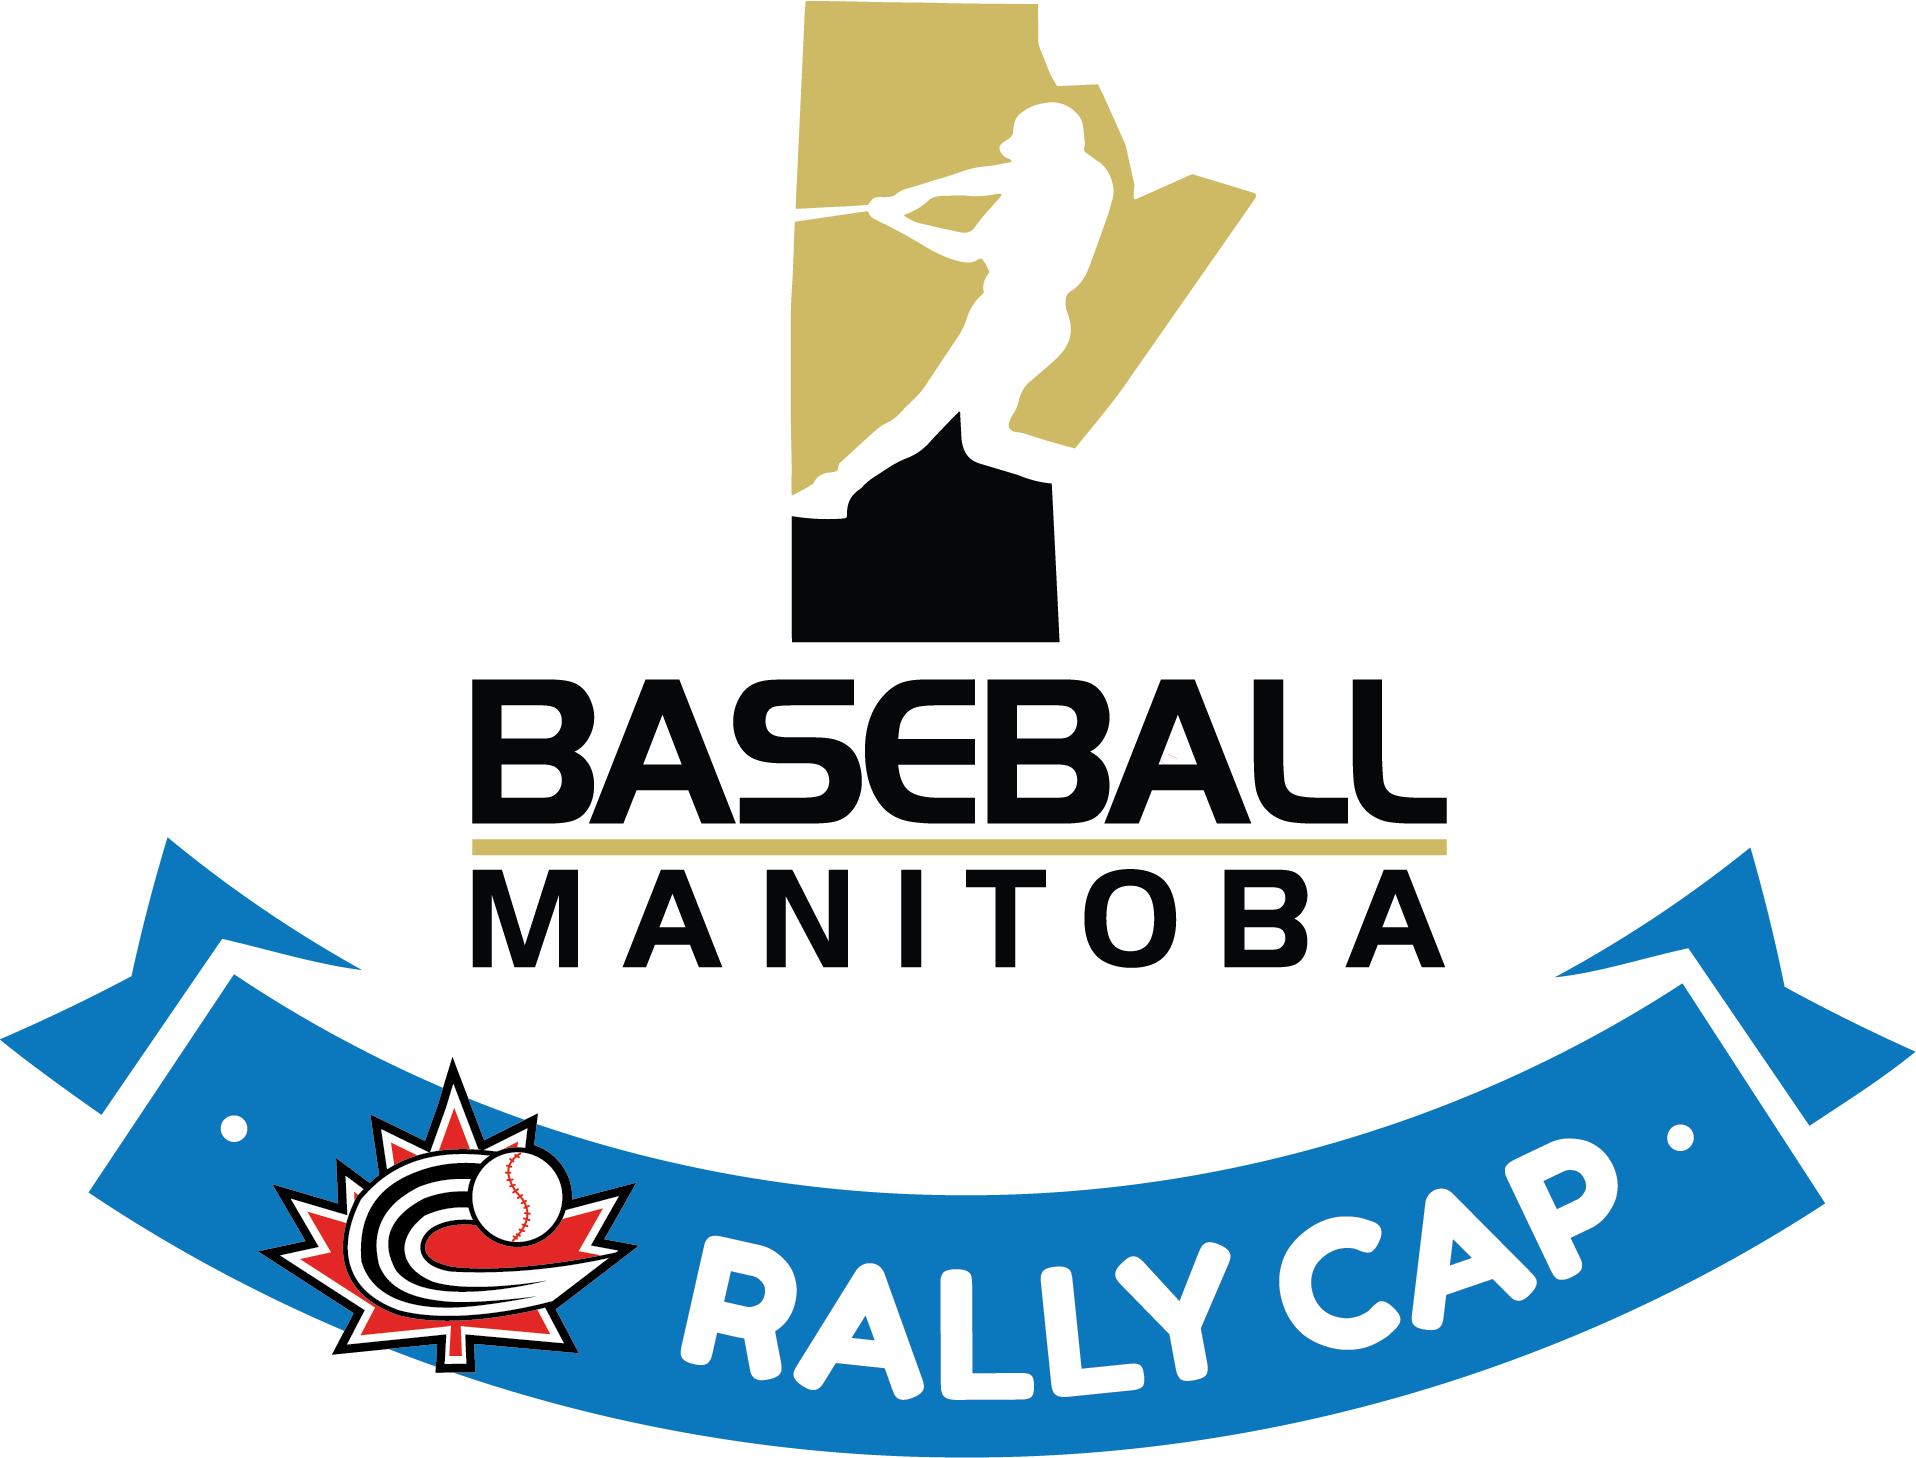 Baseball MB Rally Cap Logo